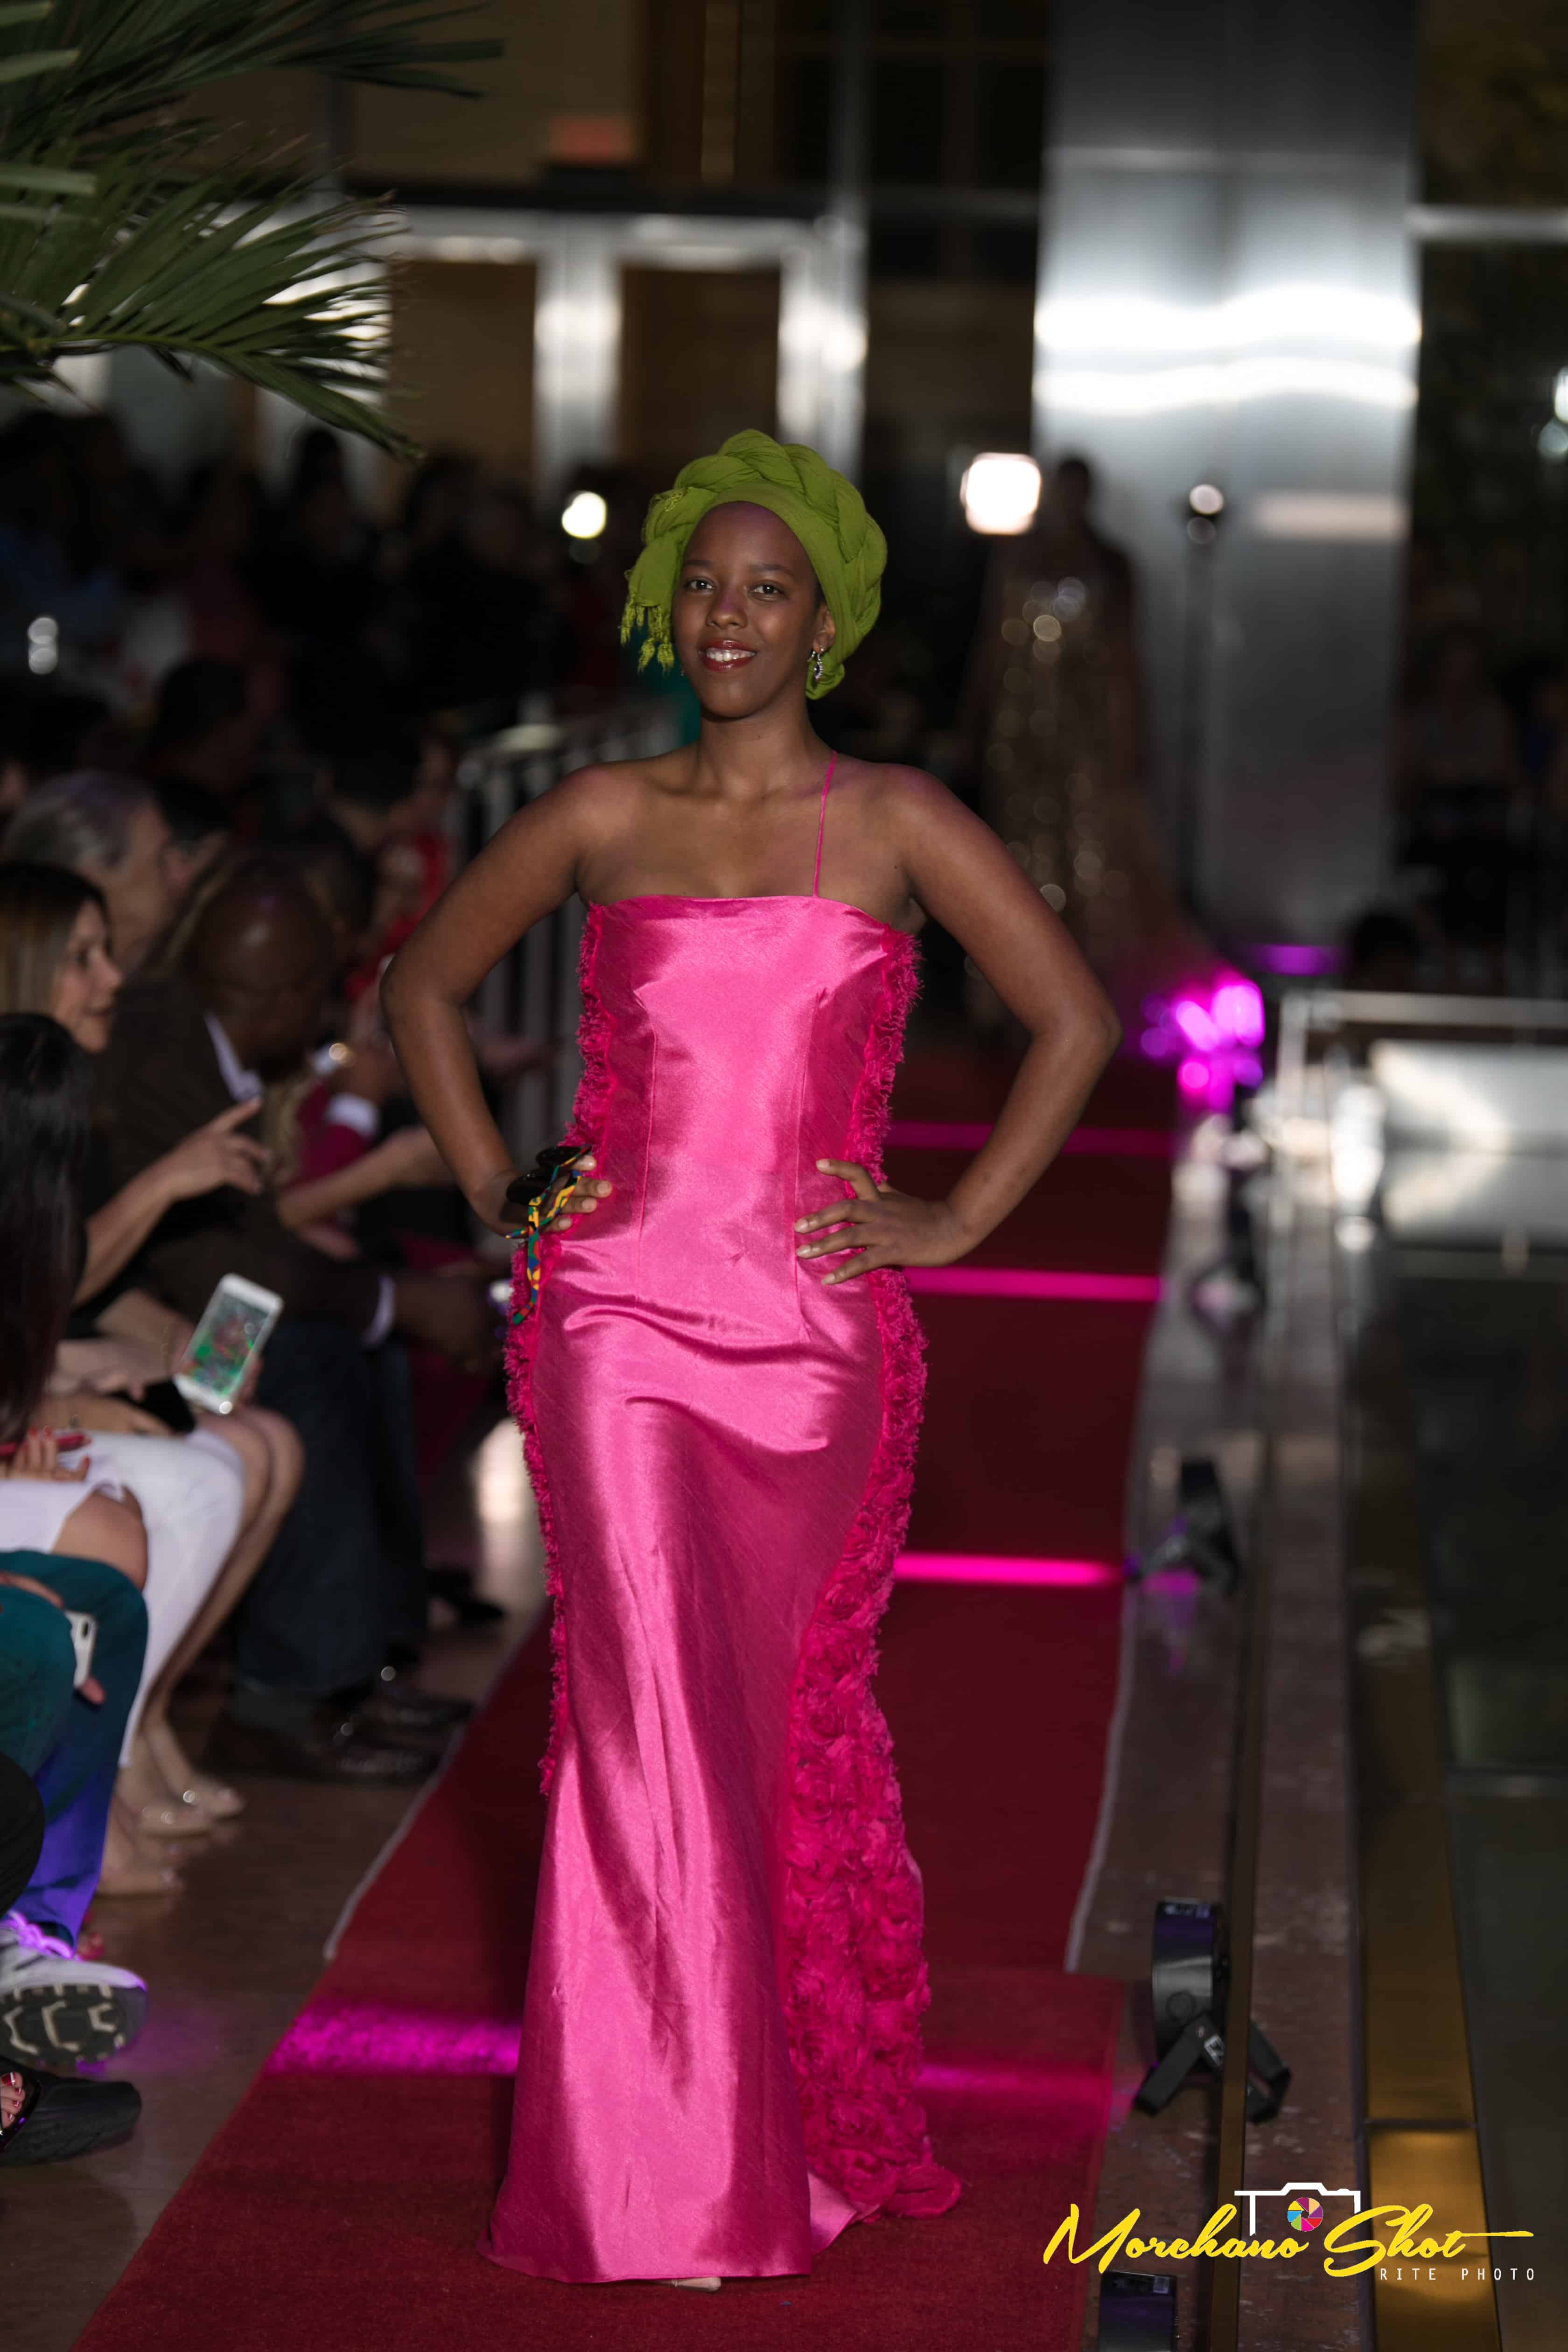 Model at Fashion Night on Brickell 2018